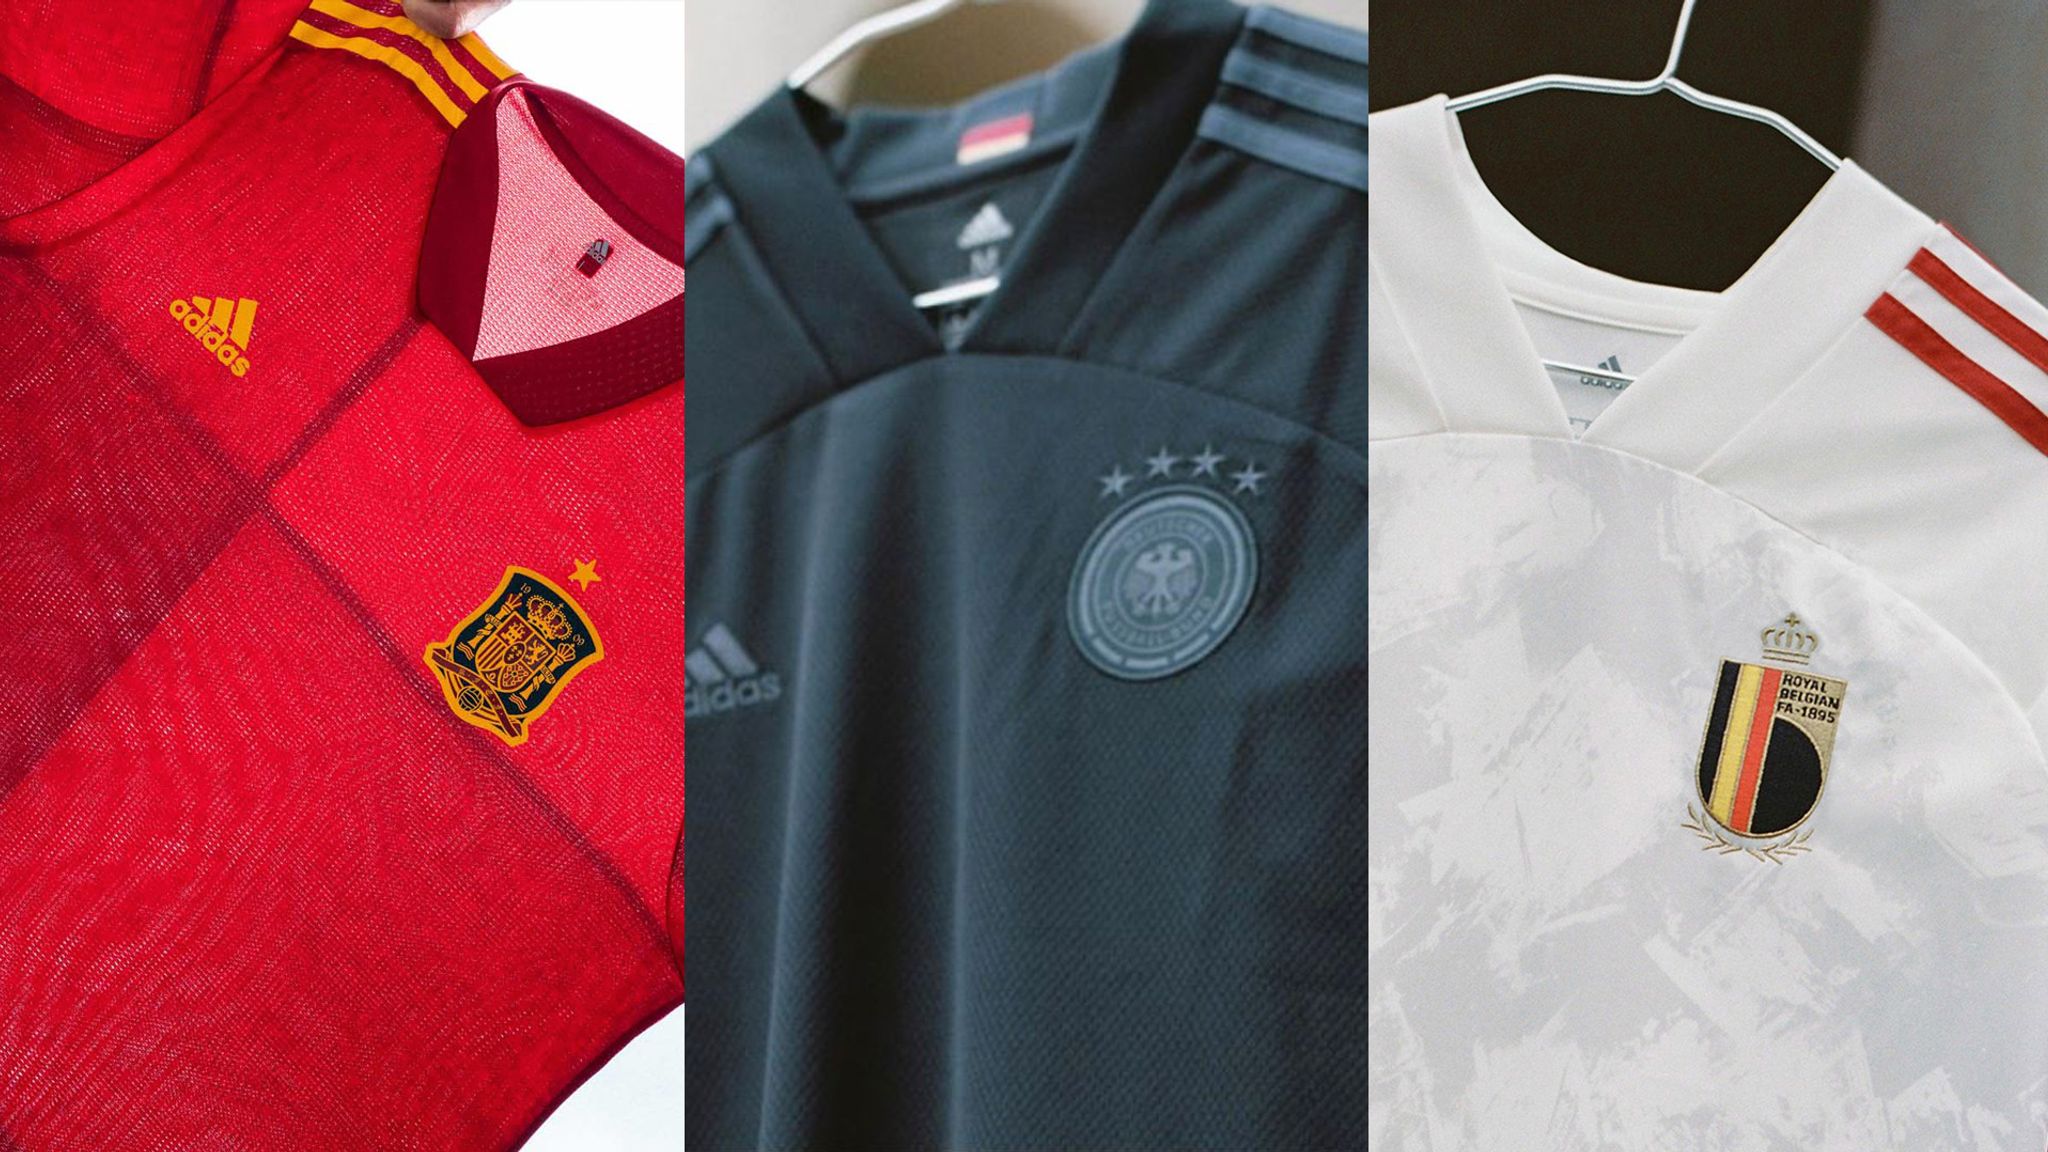 Euro 2020 Kits Revealed All The Shirts Ahead Of Summer Tournament Football News Sky Sports